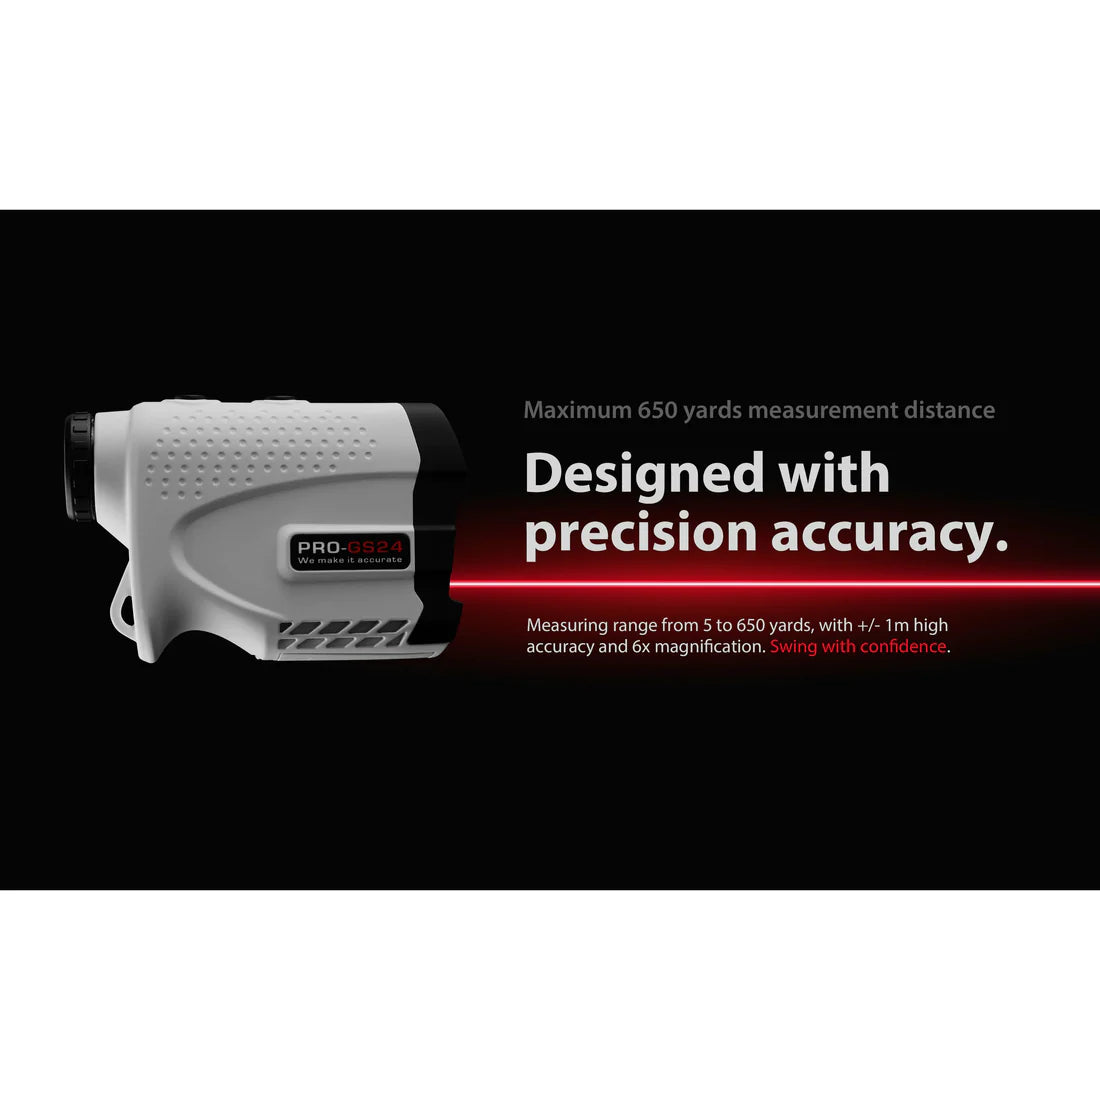 Gogogo Sport Vpro Rangefinder for Hunting 1200 Yards 6X Magnification Range  Finder with Slope GS06CA 